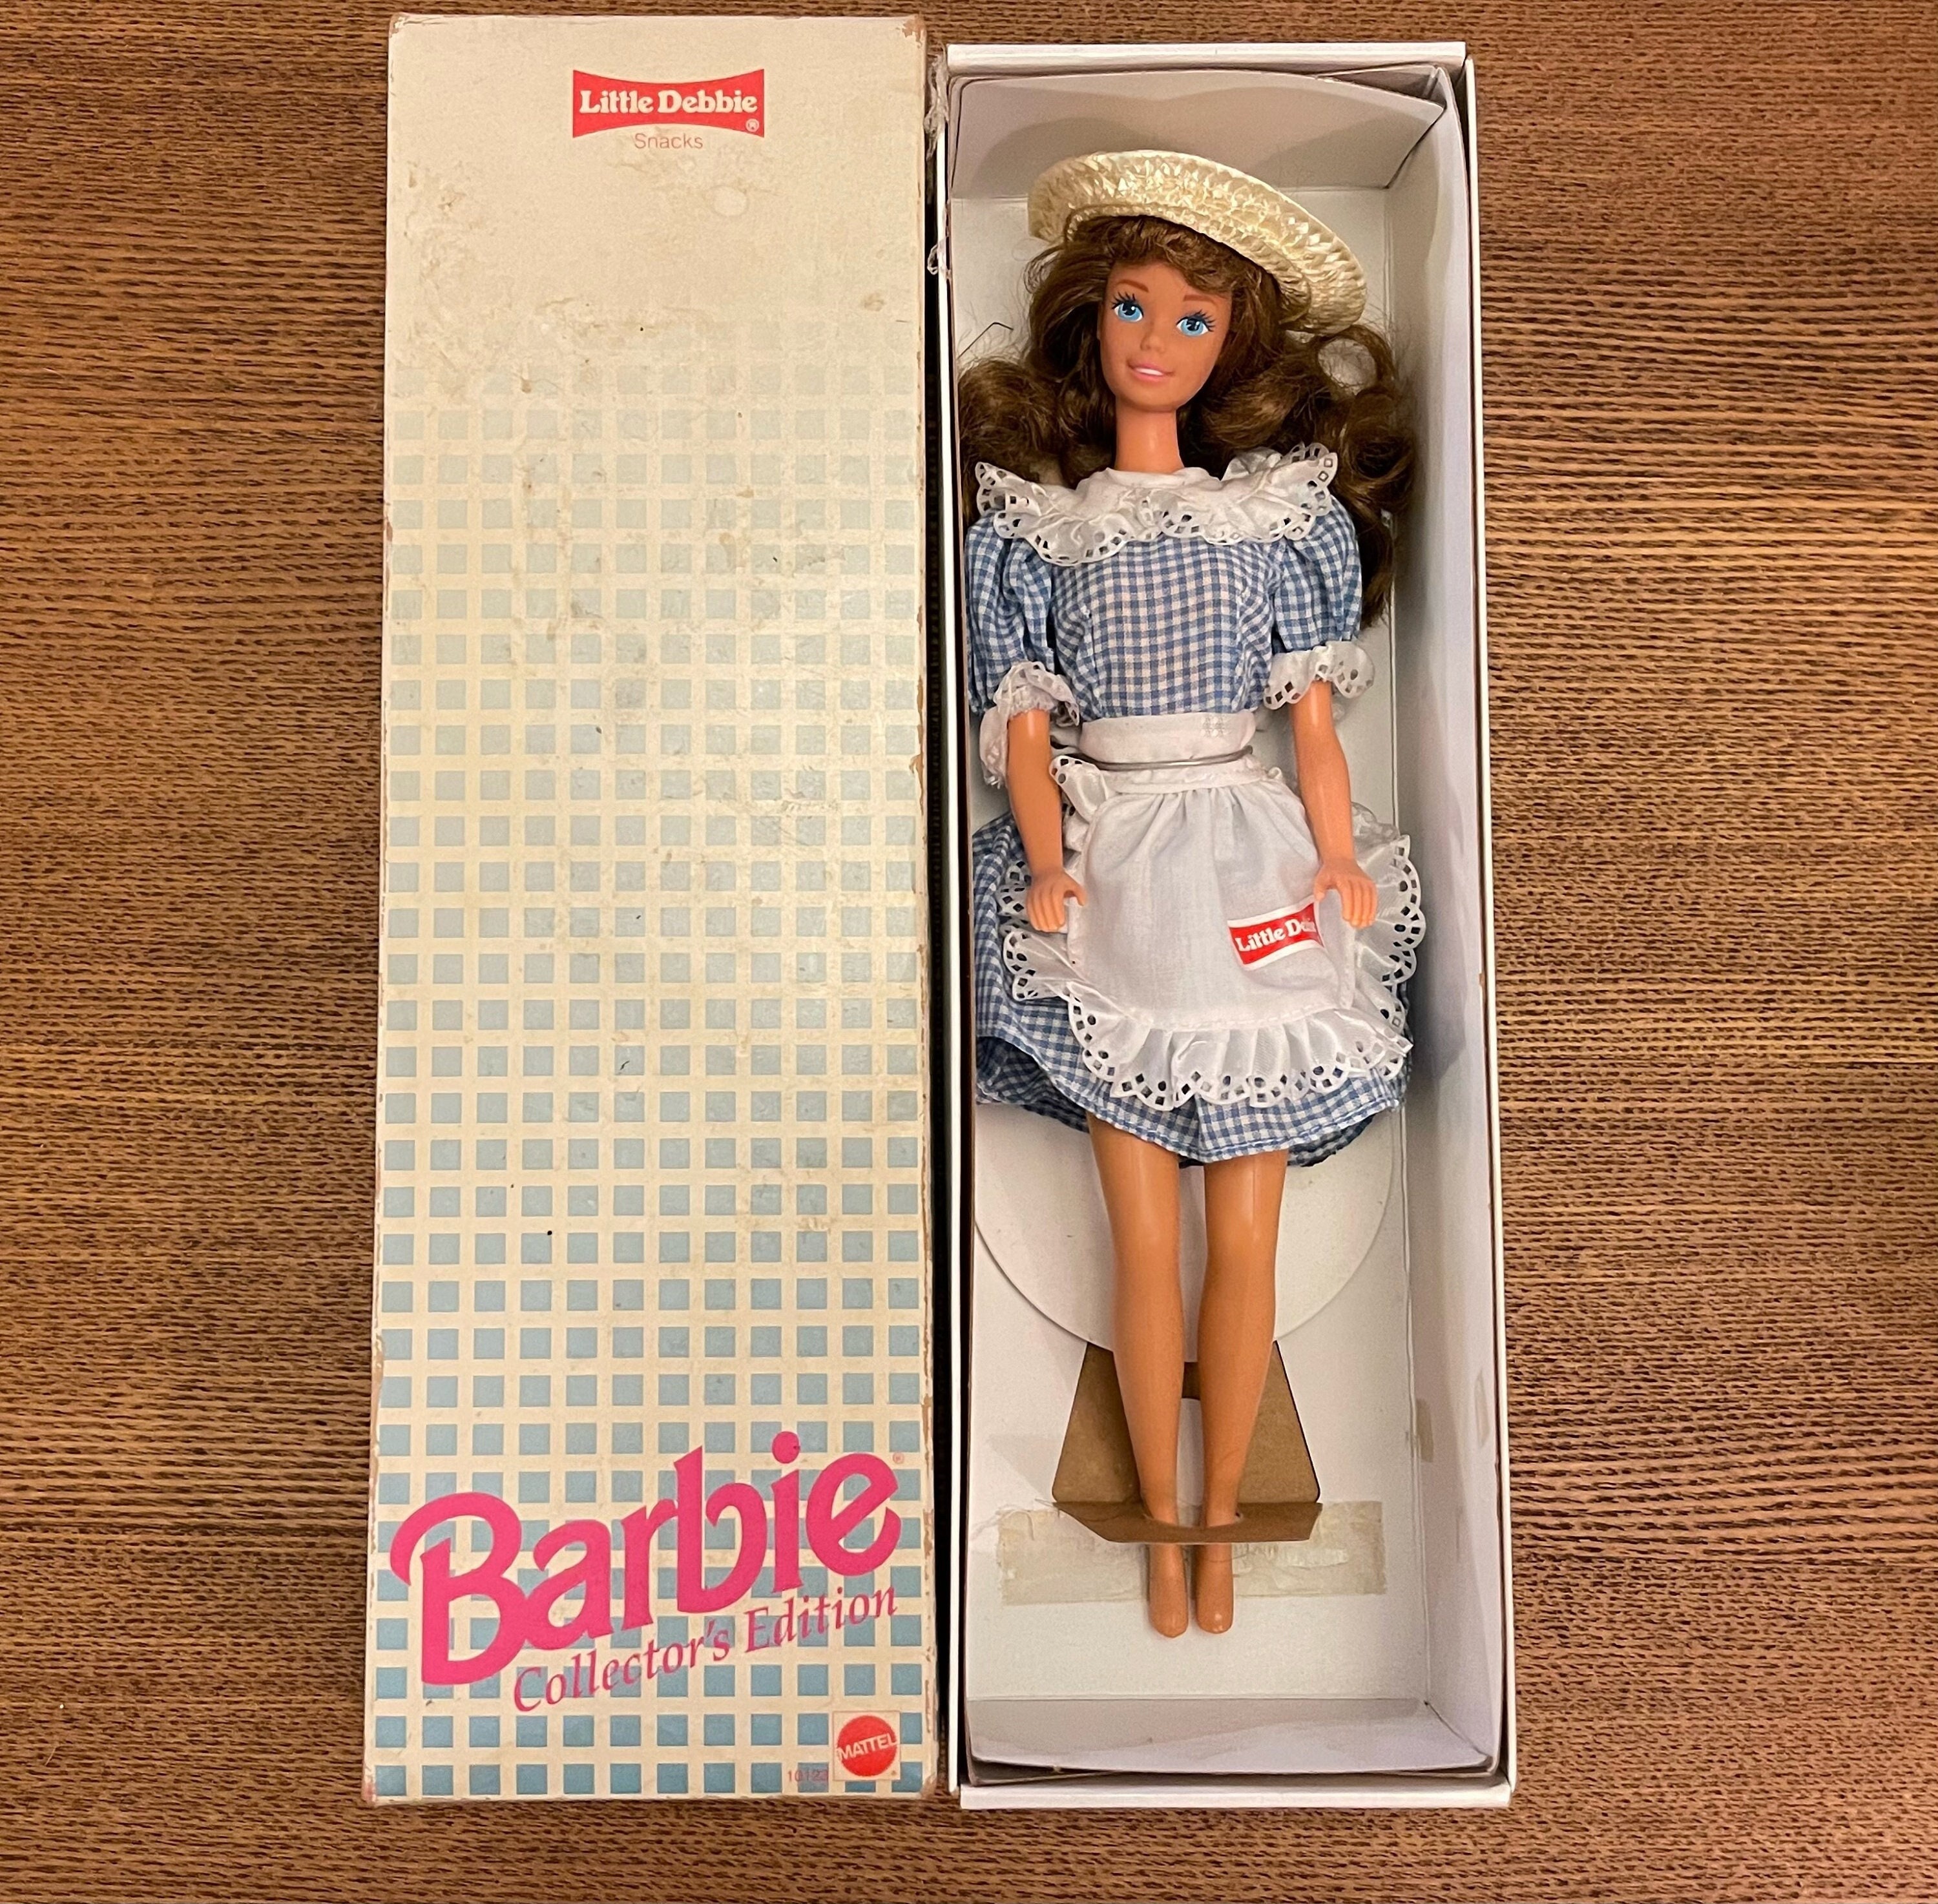 LITTLE DEBBIE BARBIE Doll…Collector’s Edition…Mattel…#10123…Straw Hat,  Checkered Dress, Decal, Stand…1992 Original Box #602